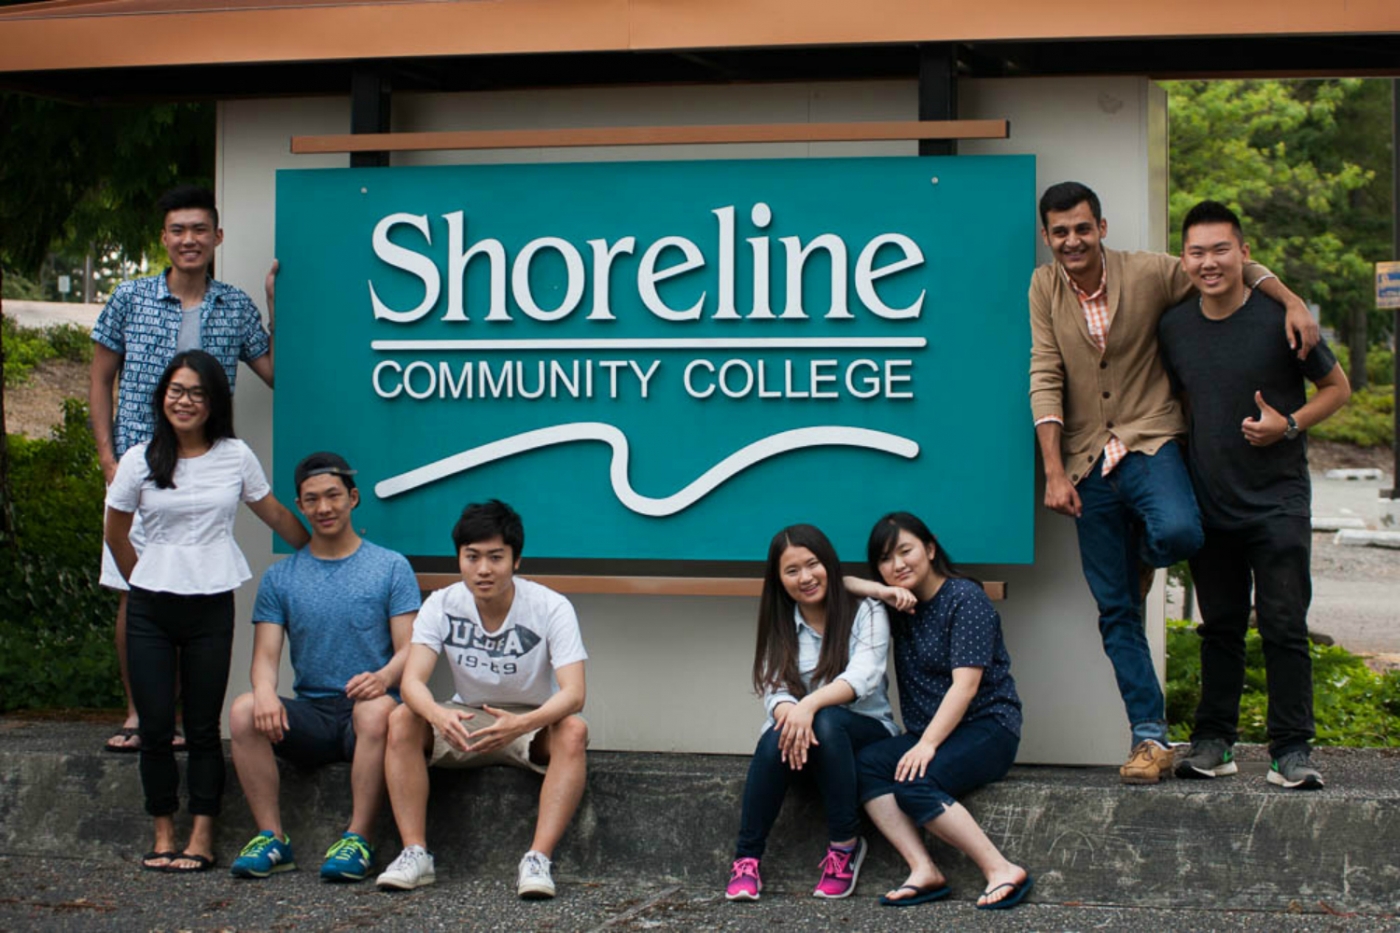 MSM Group - Shoreline Community College